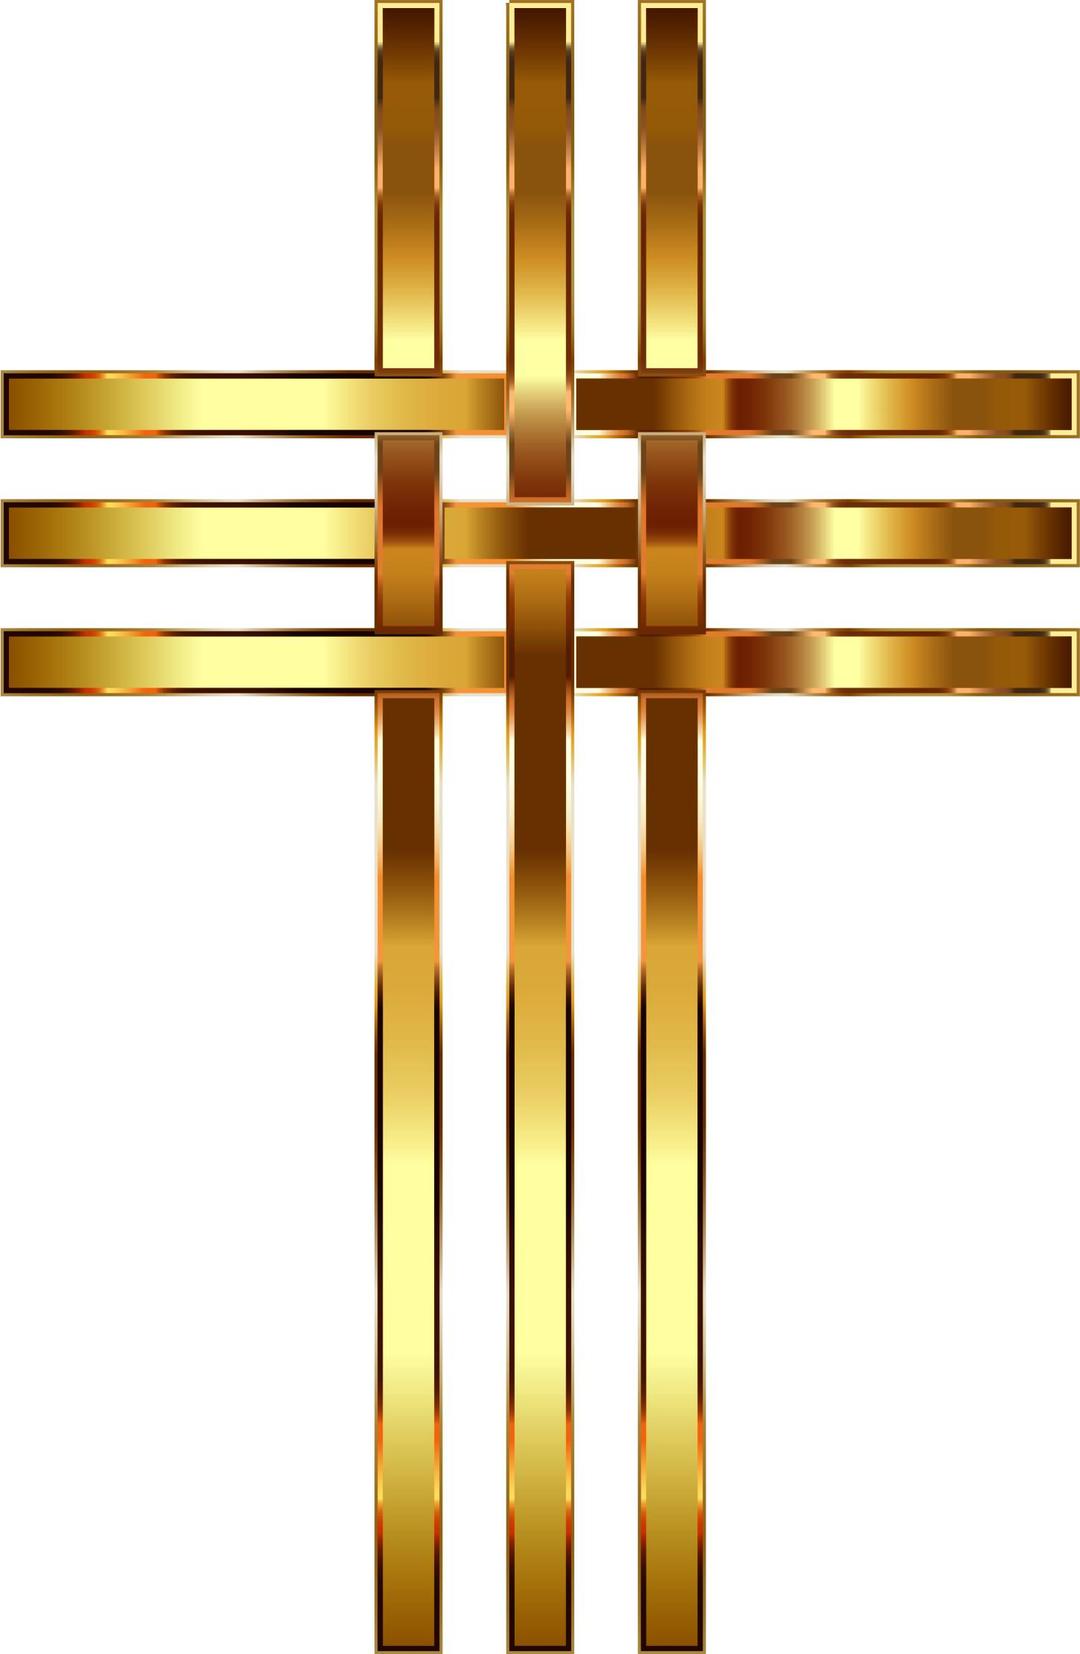 Interlocked Stylized Golden Cross Enhanced Contrast No Background png transparent